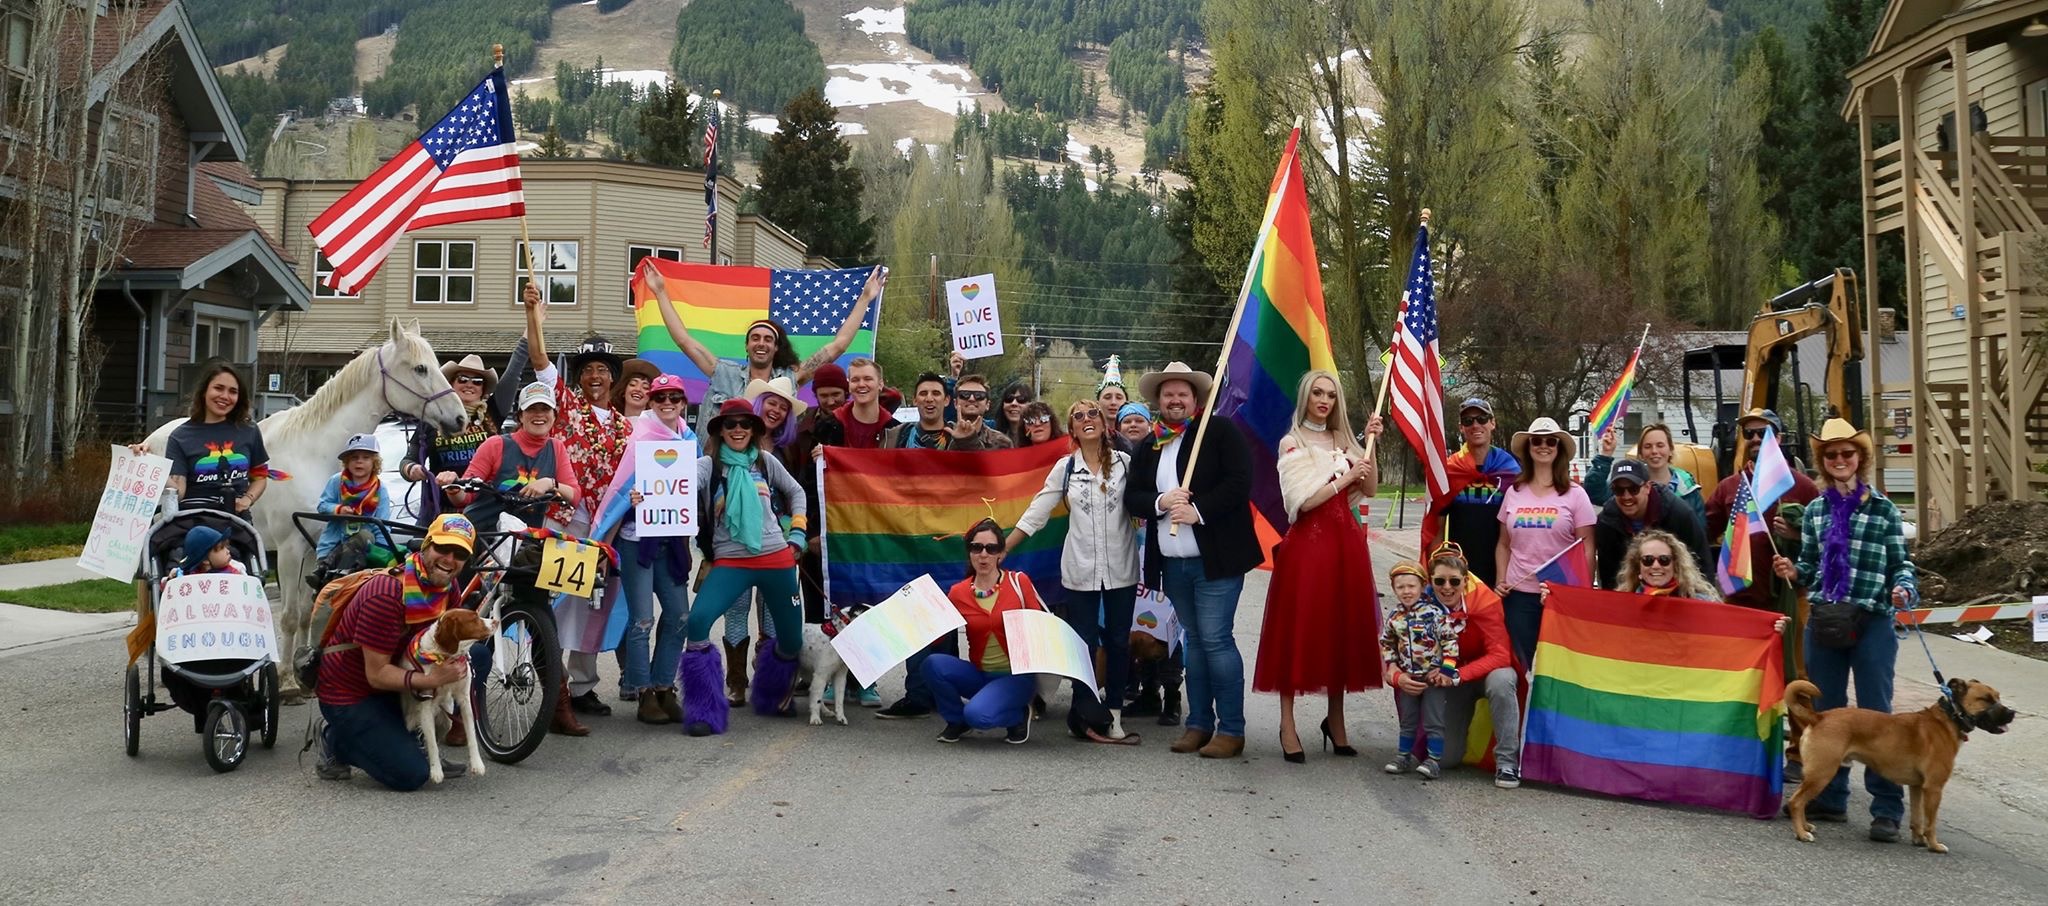 Jackson Hole Pride Takes to the Streets